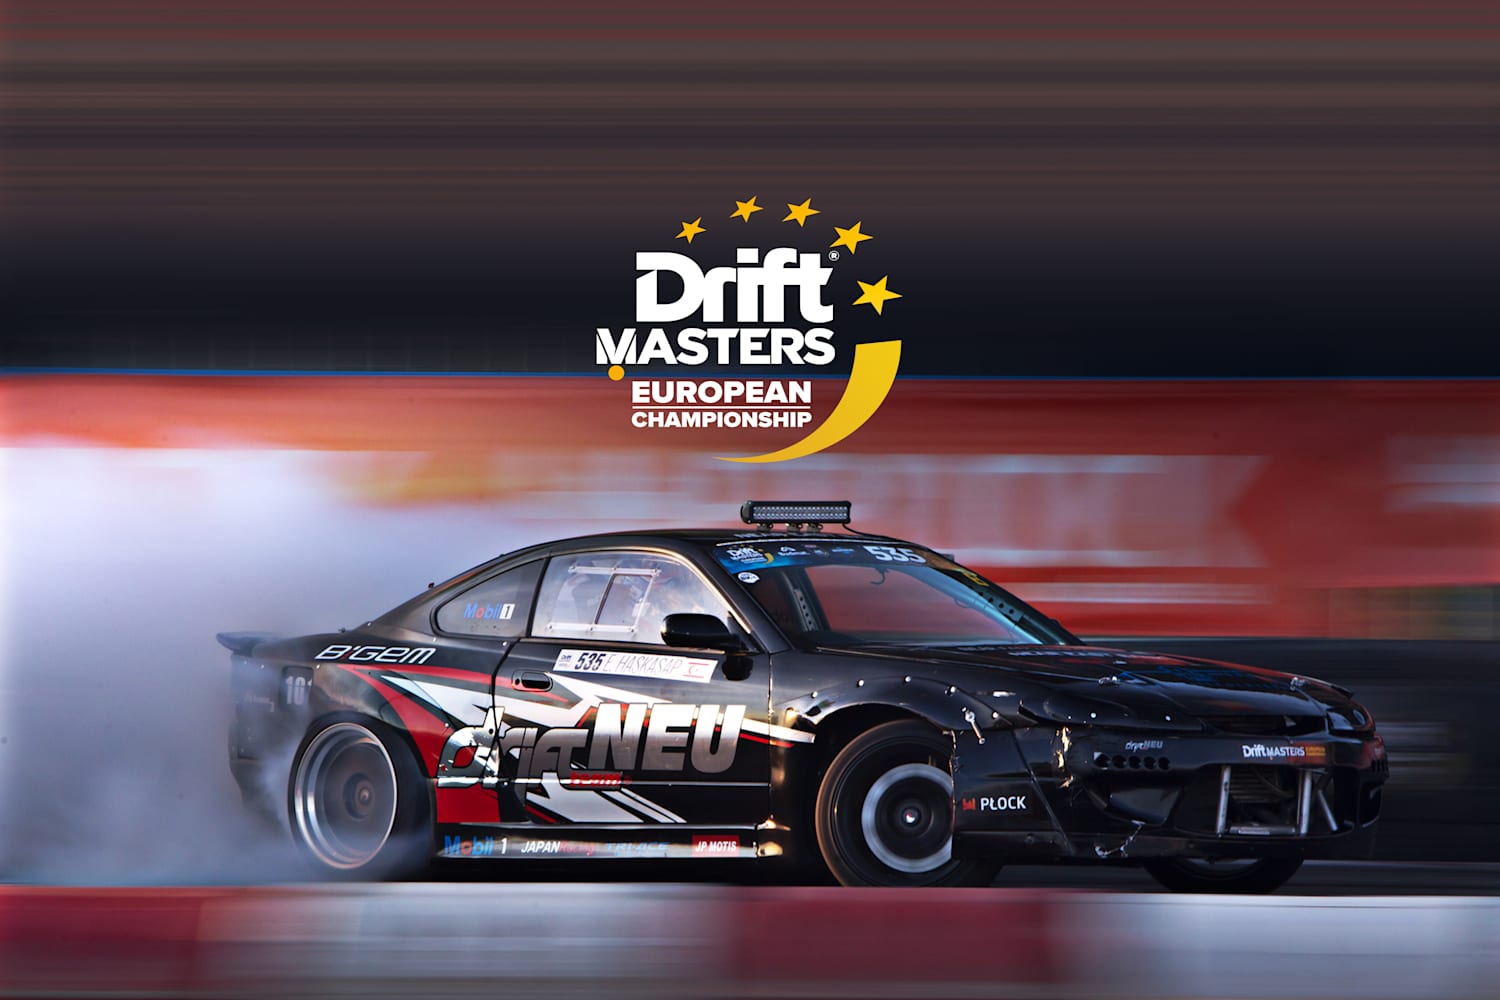 Drift Masters European Championship Event calendar